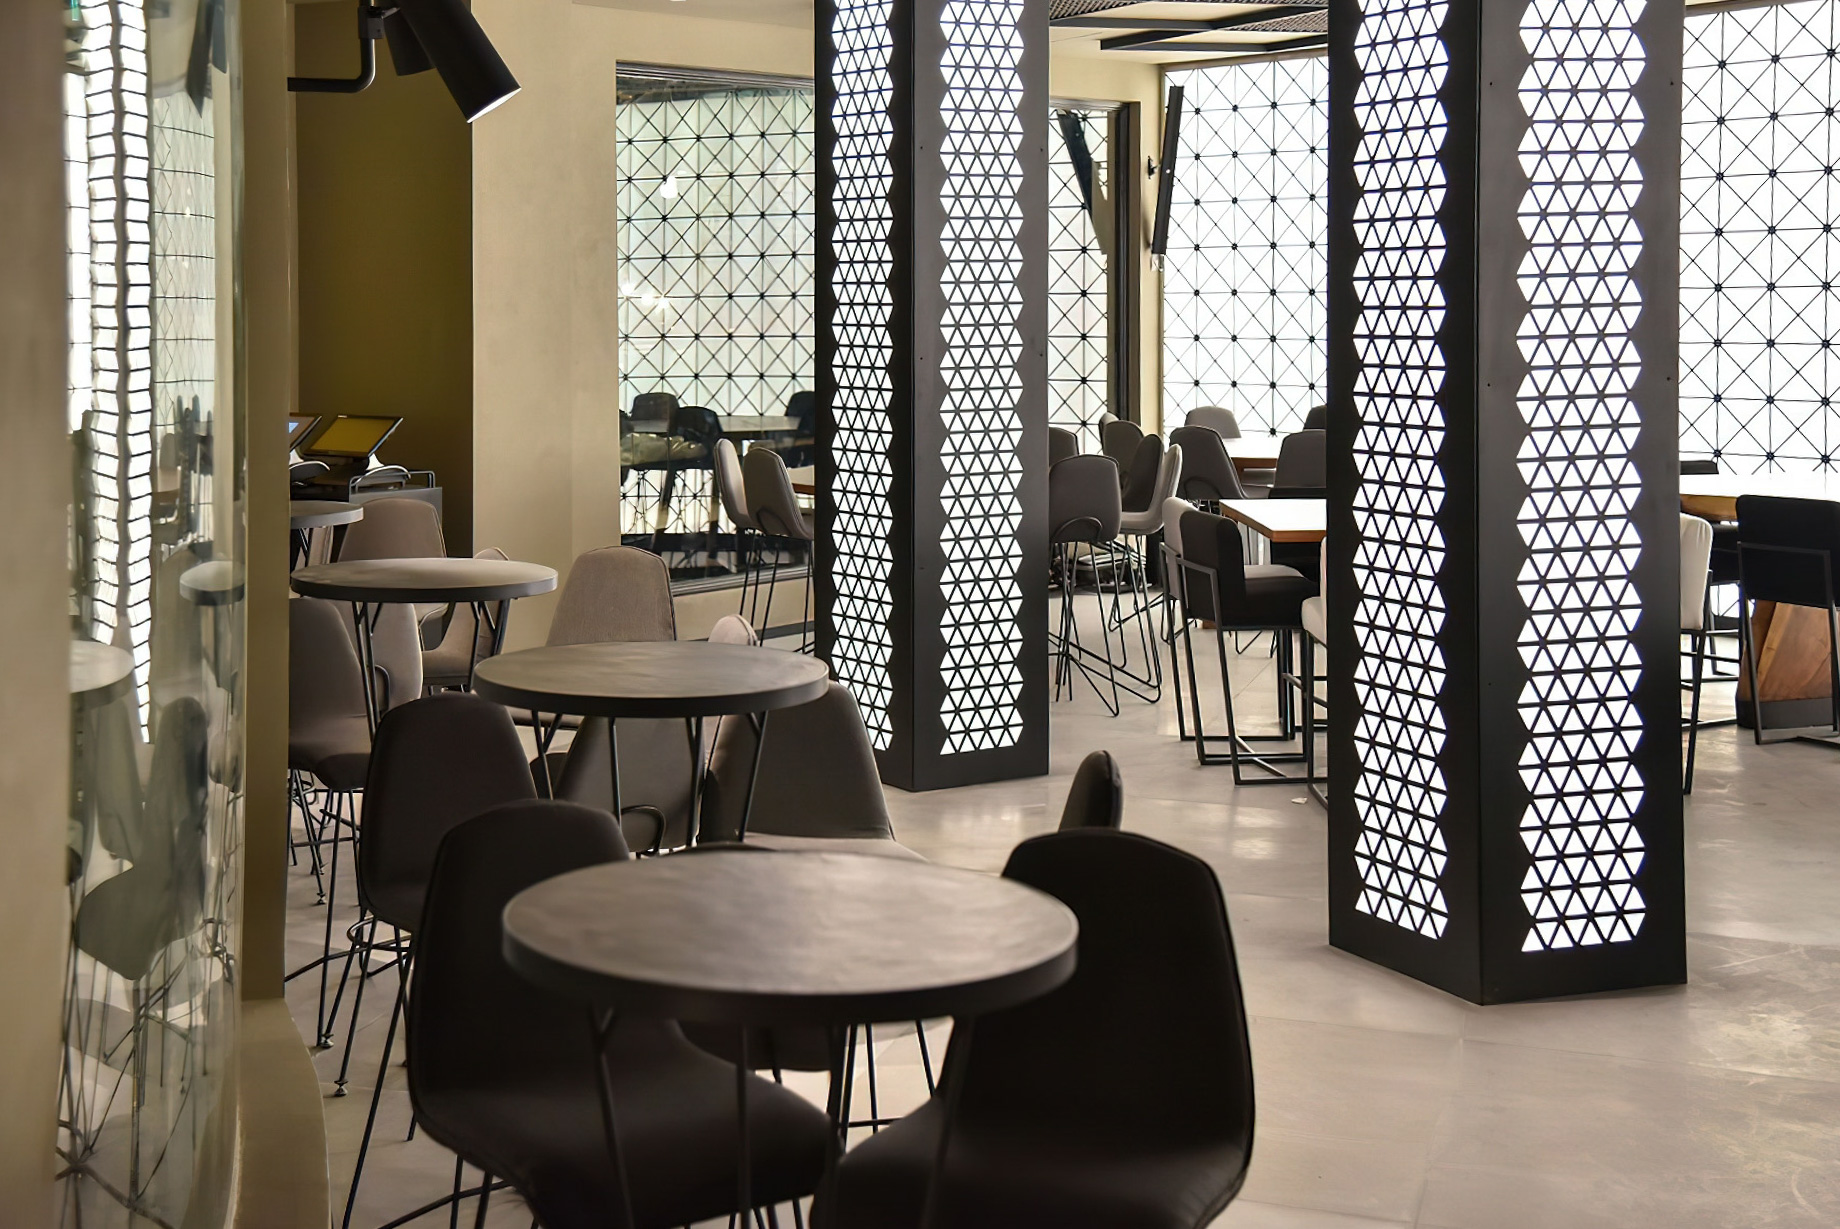 Sharq Village & Spa, A Ritz-Carlton Hotel - Doha, Qatar - Iris Doha Lounge Tables